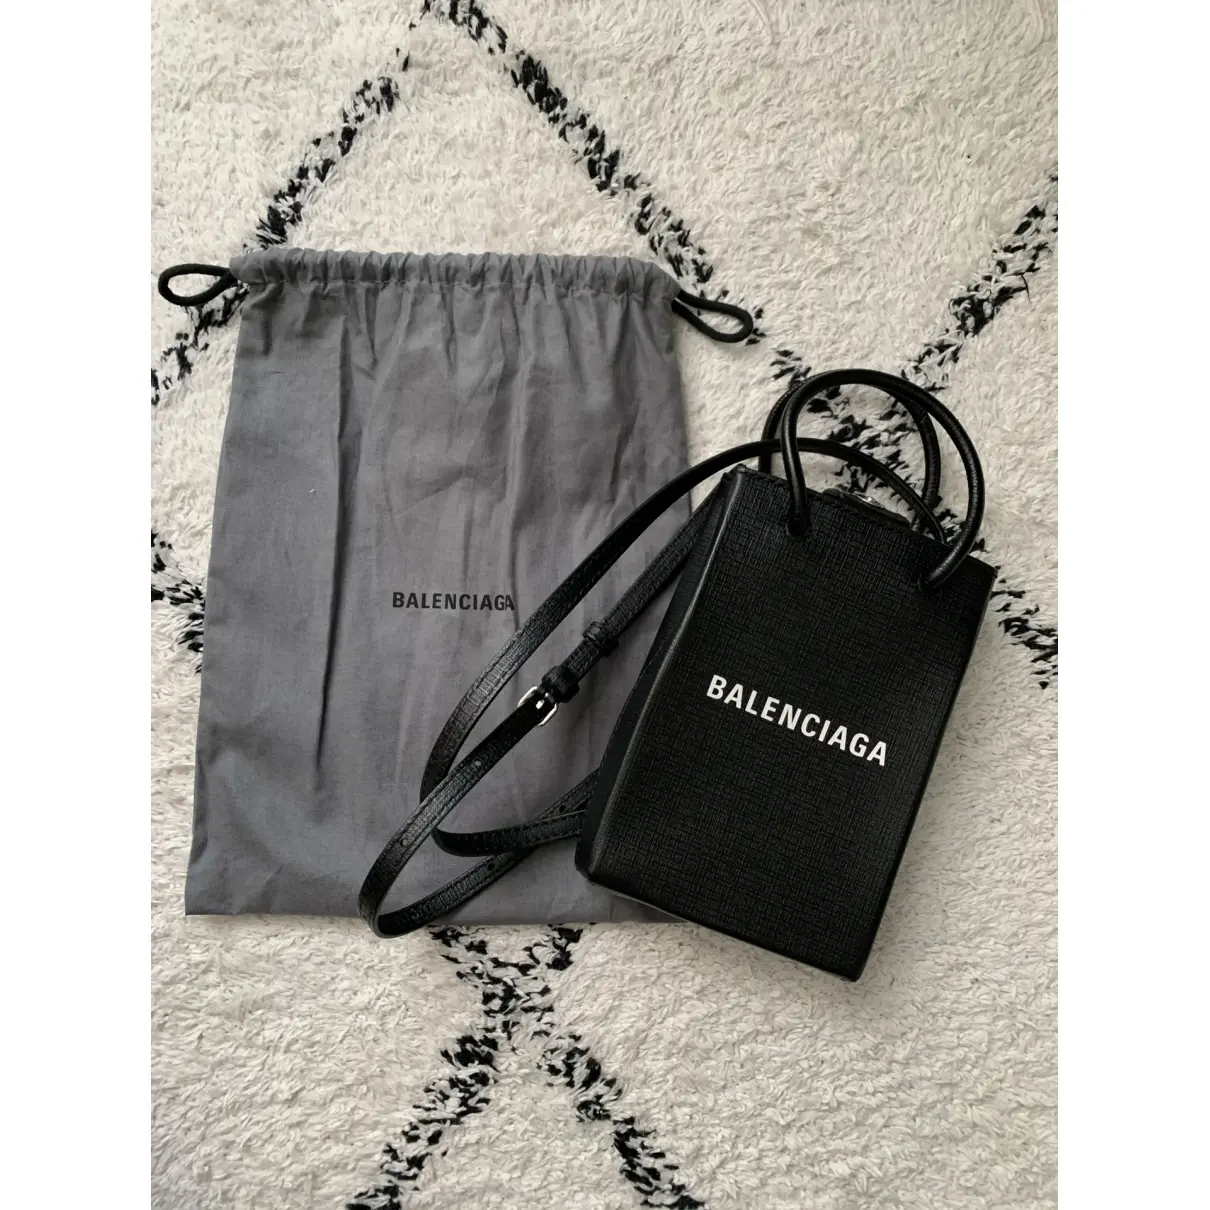 Buy Balenciaga Shopping Phone Holder leather bag online